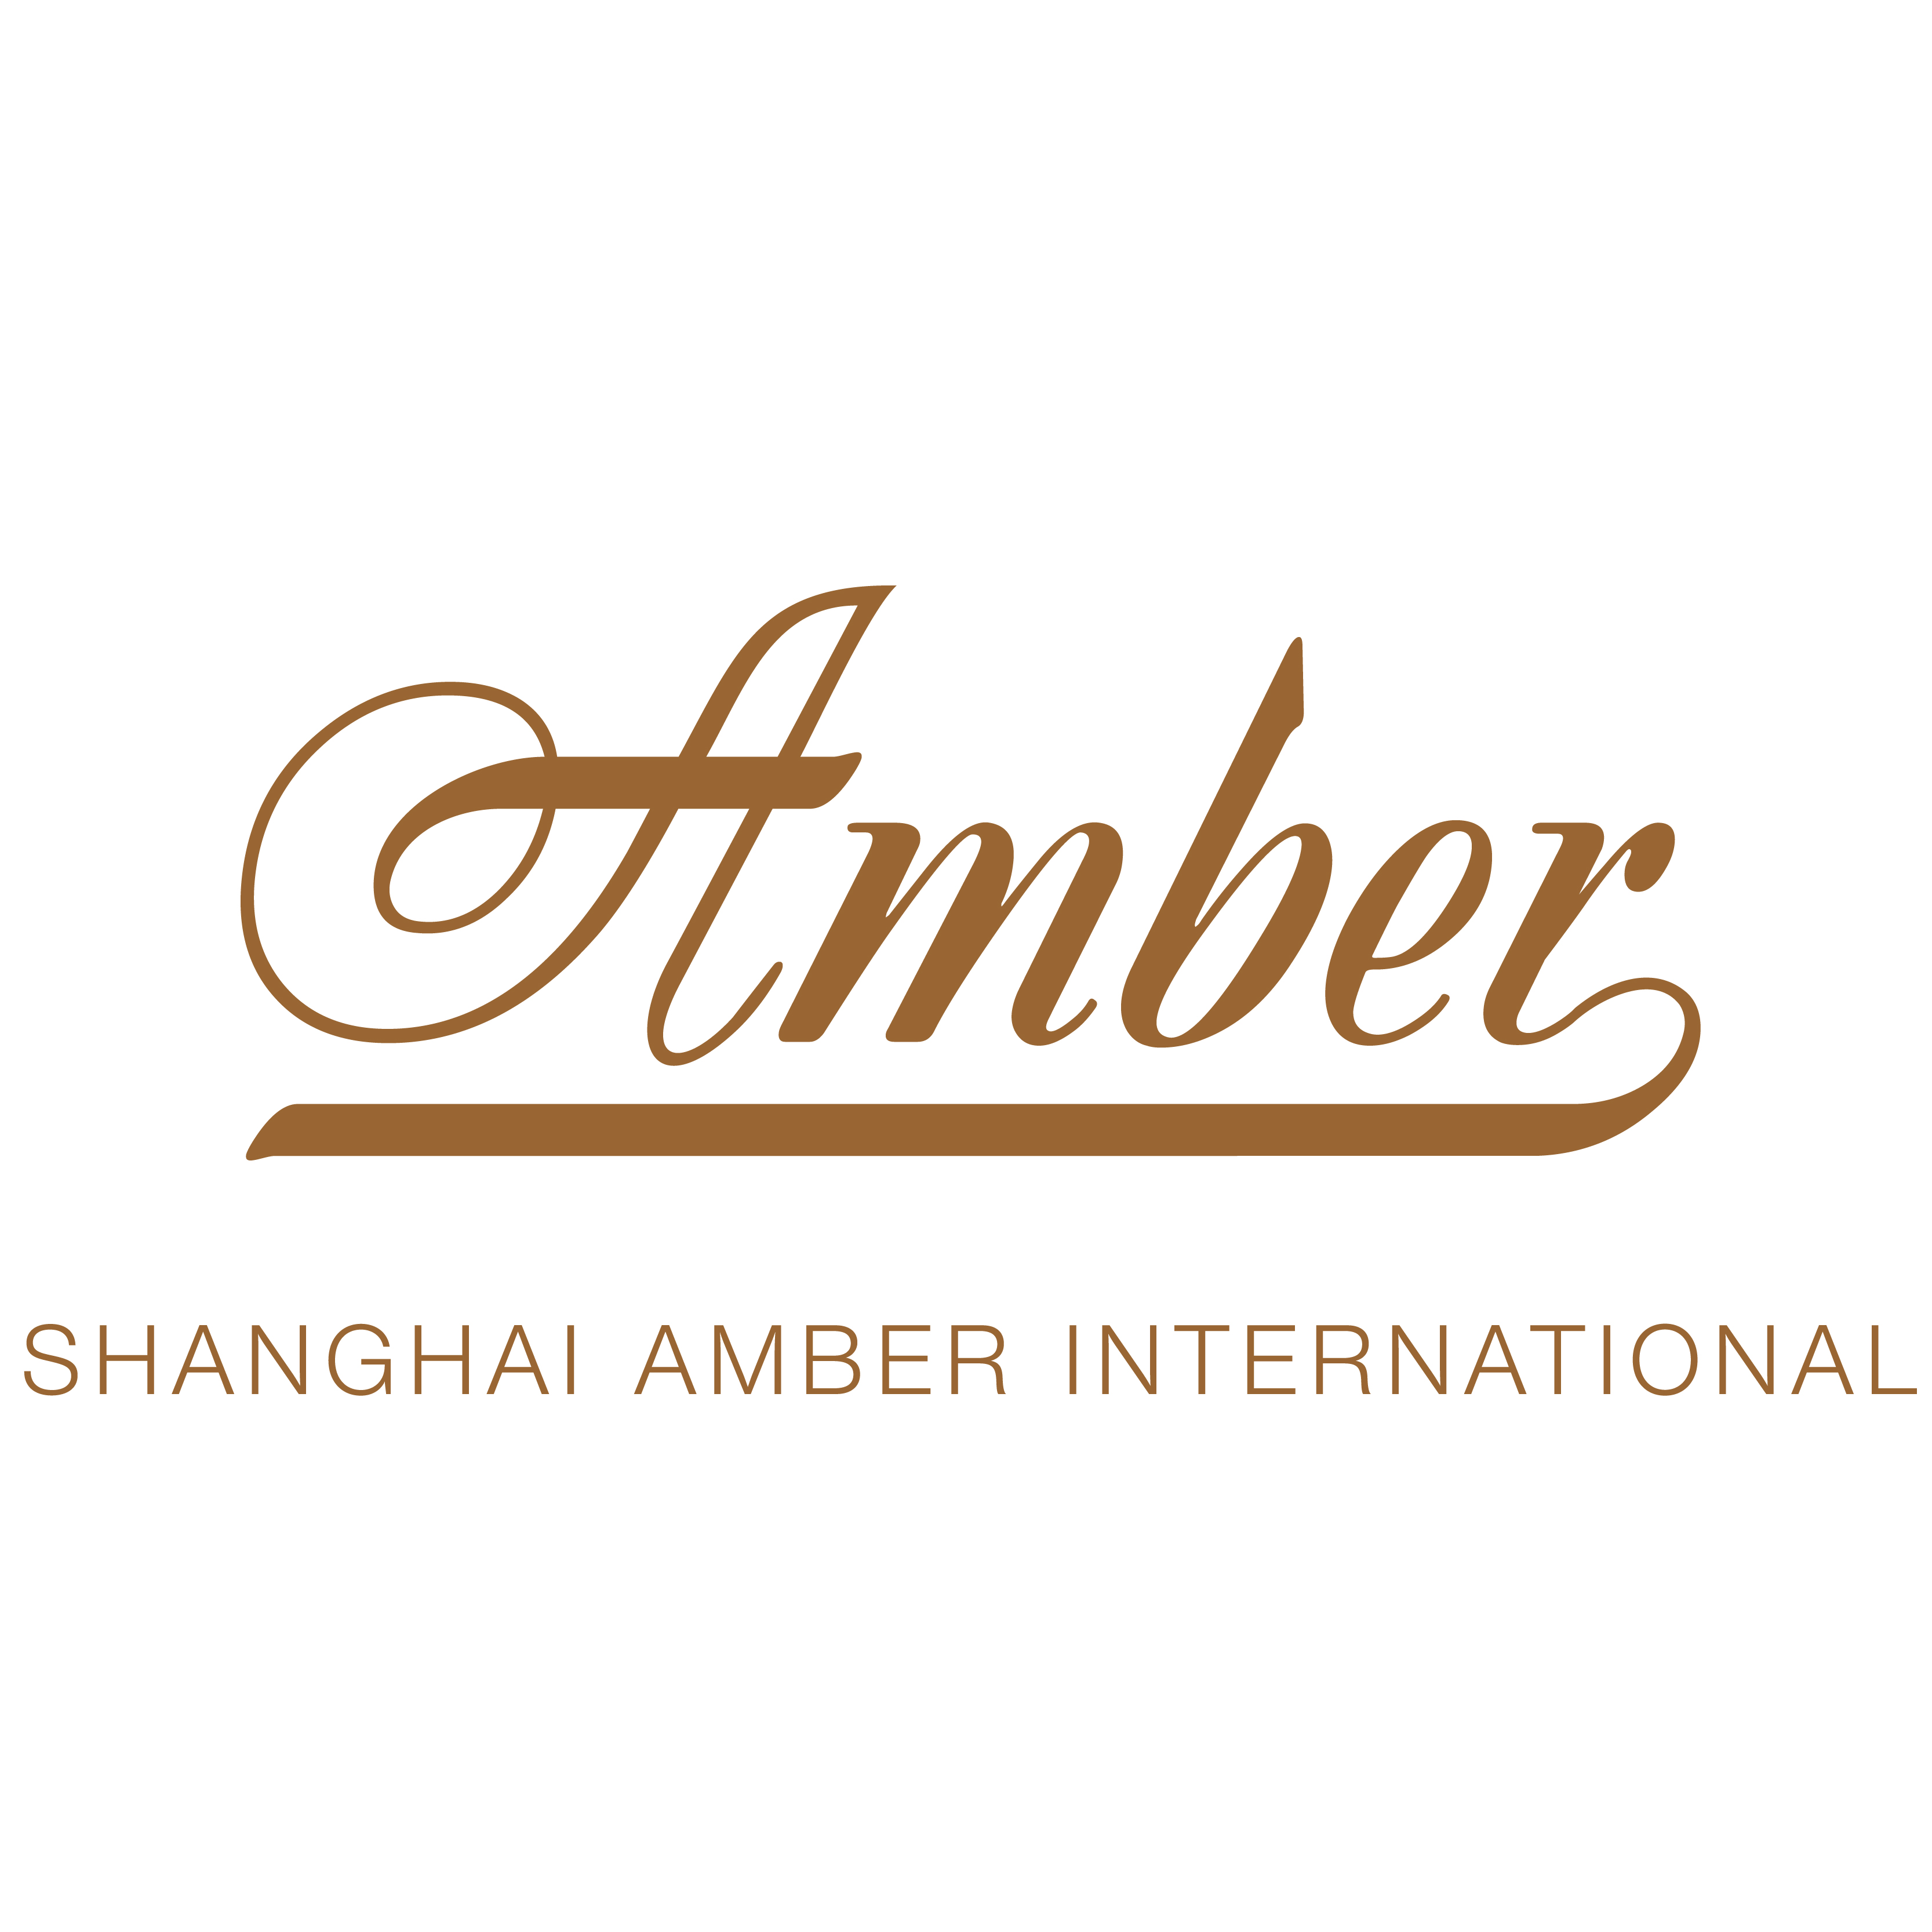 SHANGHAI AMBER INTERNATIONAL TRADE CO.,LTD